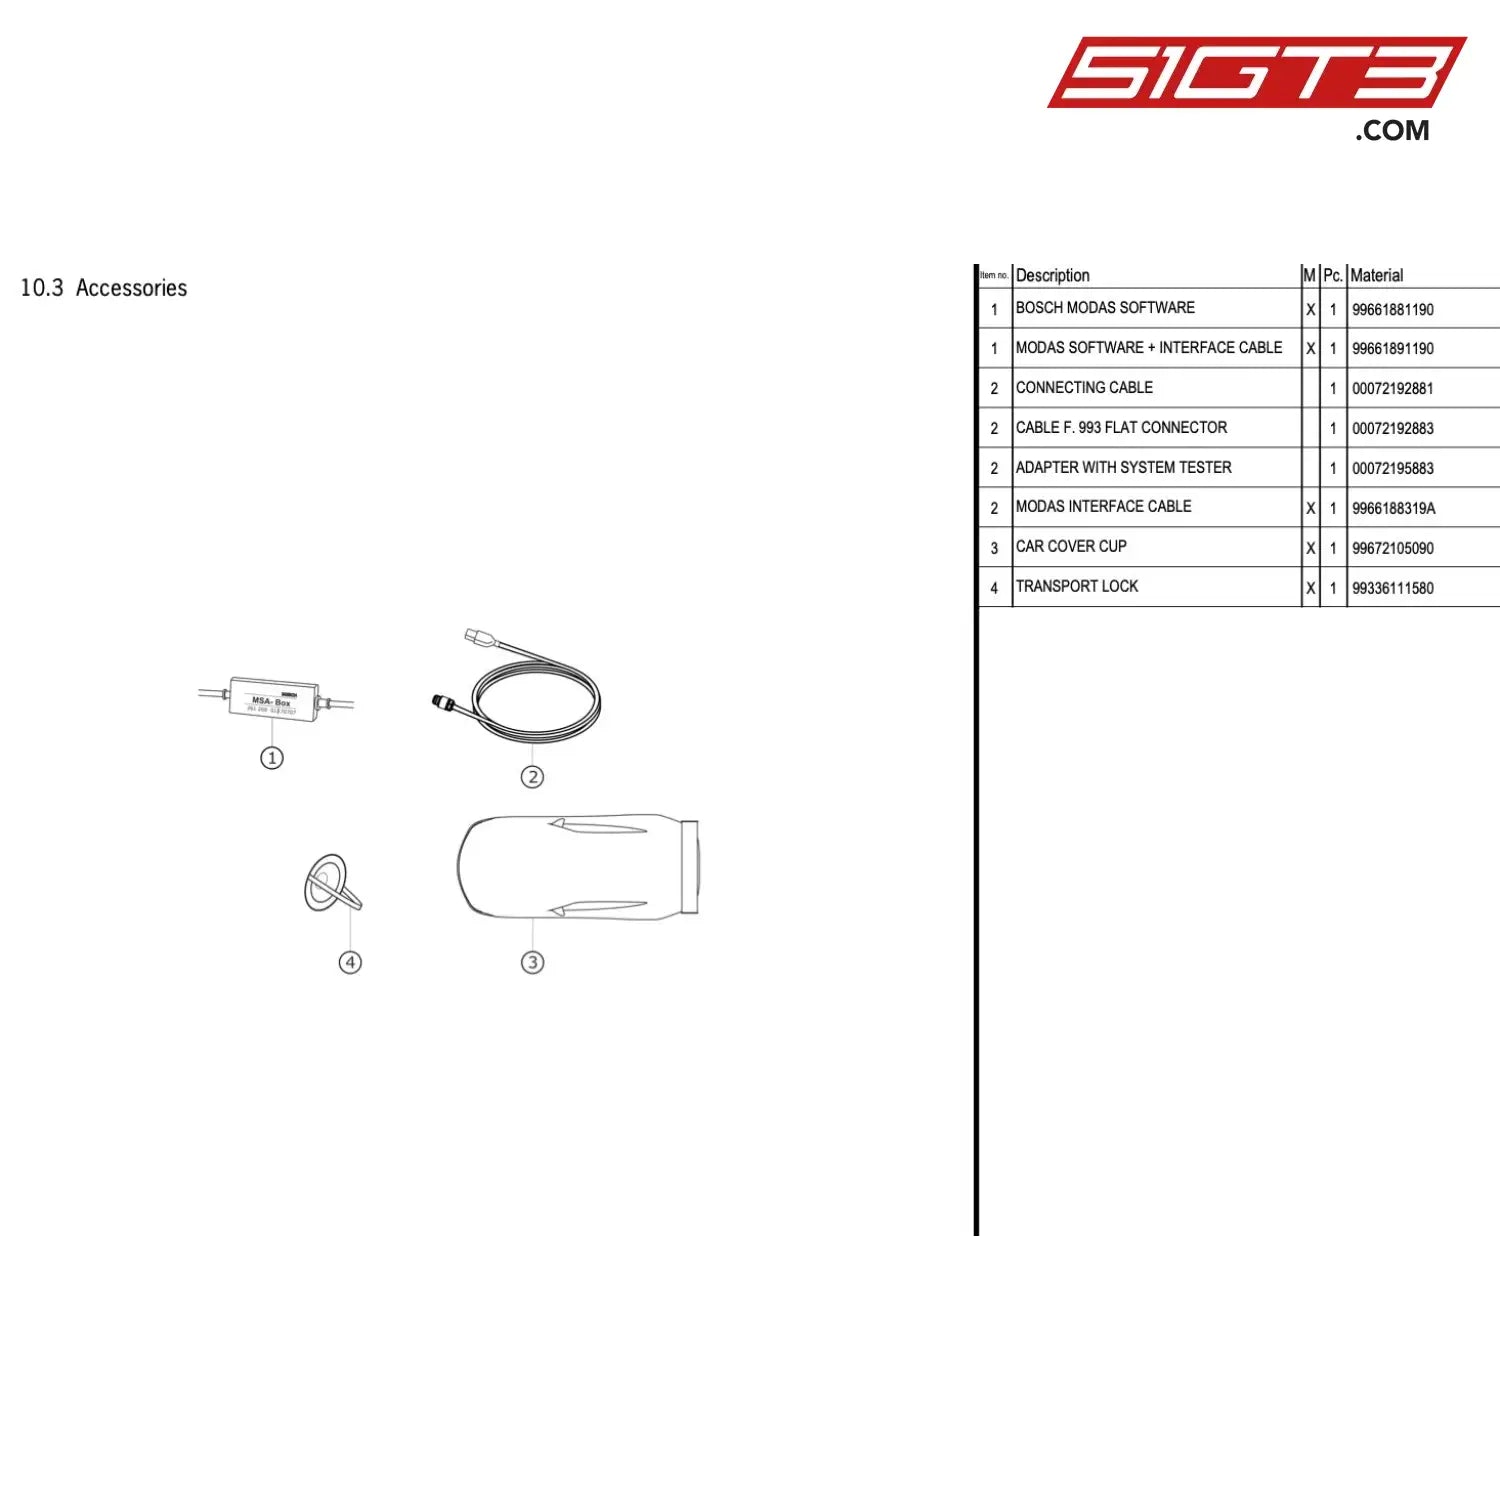 Modas Software + Interface Cable - 99661891190 [Porsche 911 Gt3 Cup Type 996] Accessories